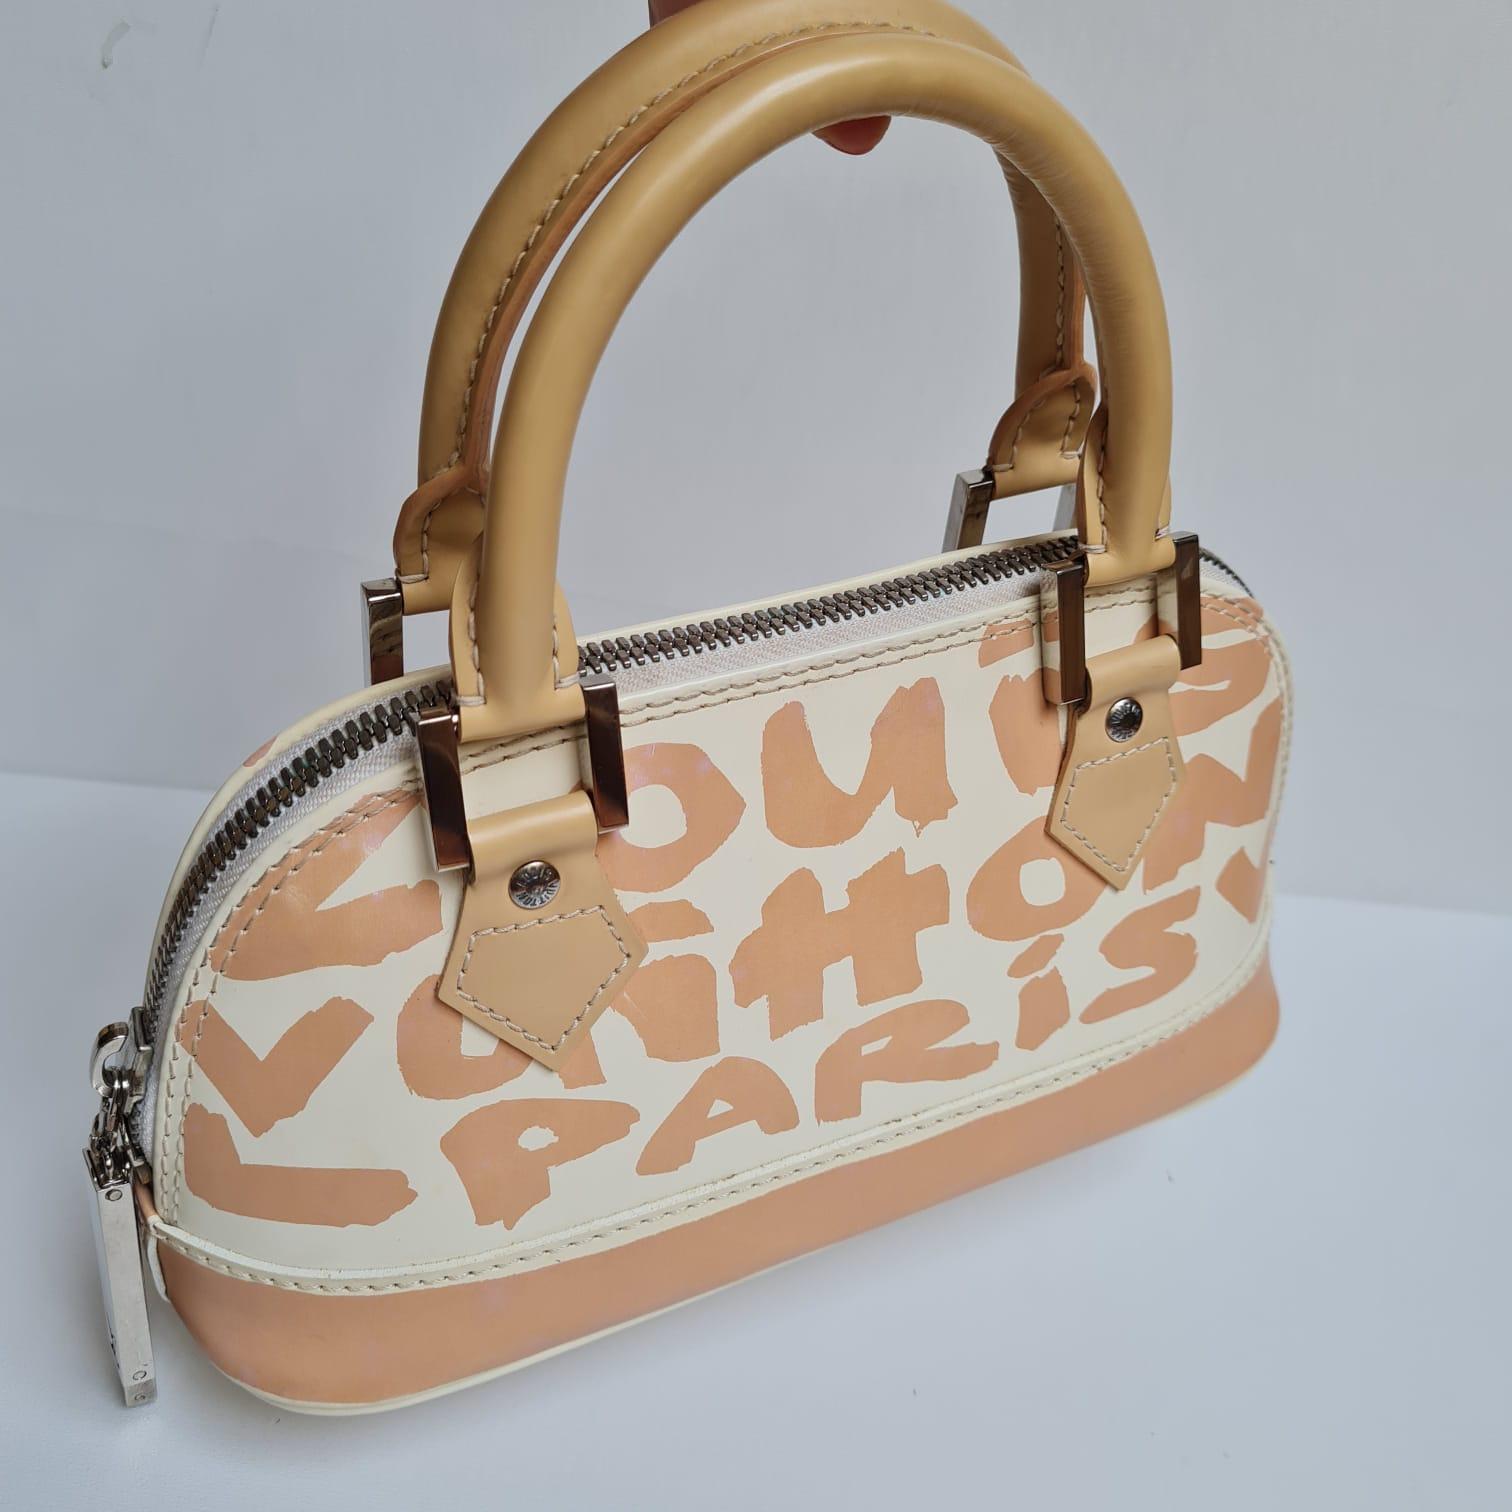 Louis Vuitton Stephen Sprouse Graffiti Mini East West Bag For Sale 5